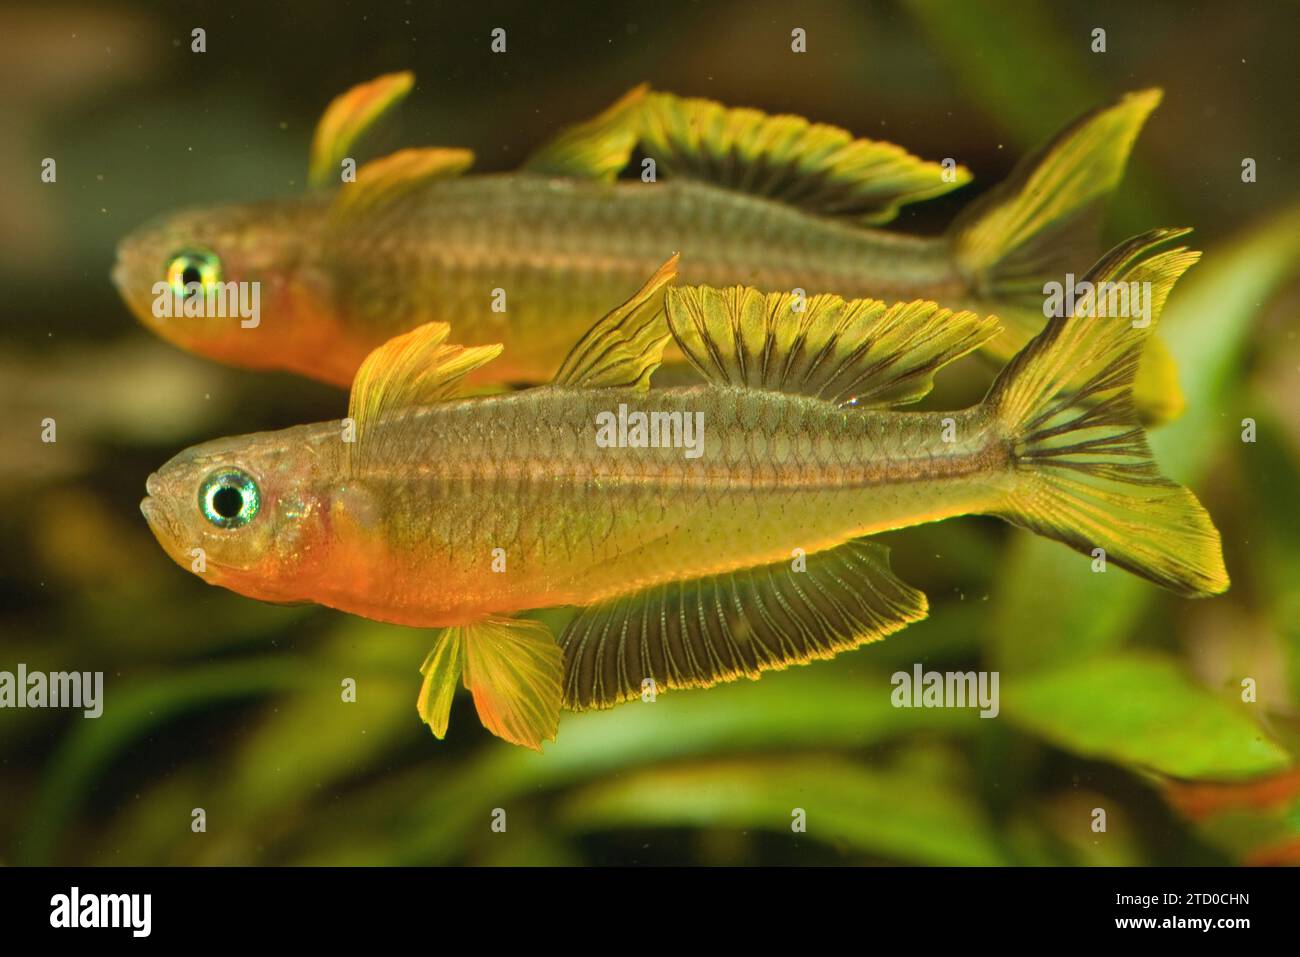 Pesce arcobaleno a coda forata (Pseudomugil furcatus, Popondichthys furcatus), due maschi rivali, vista laterale Foto Stock